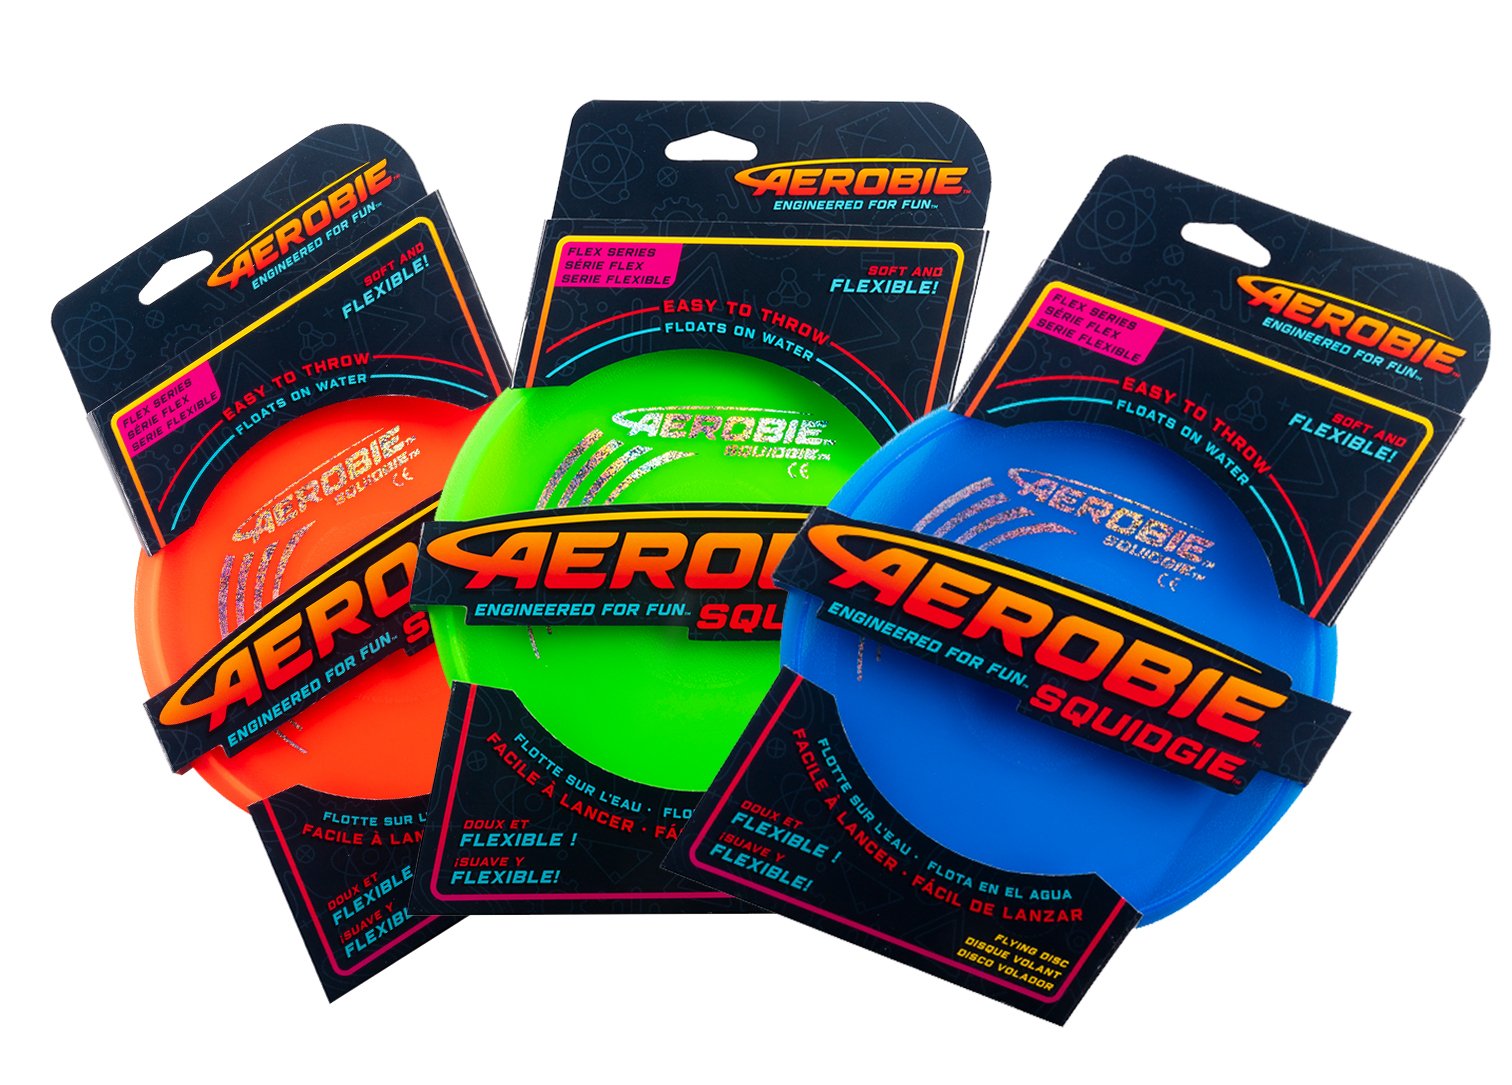 Aerobie Squidgie Disc Assortment Review